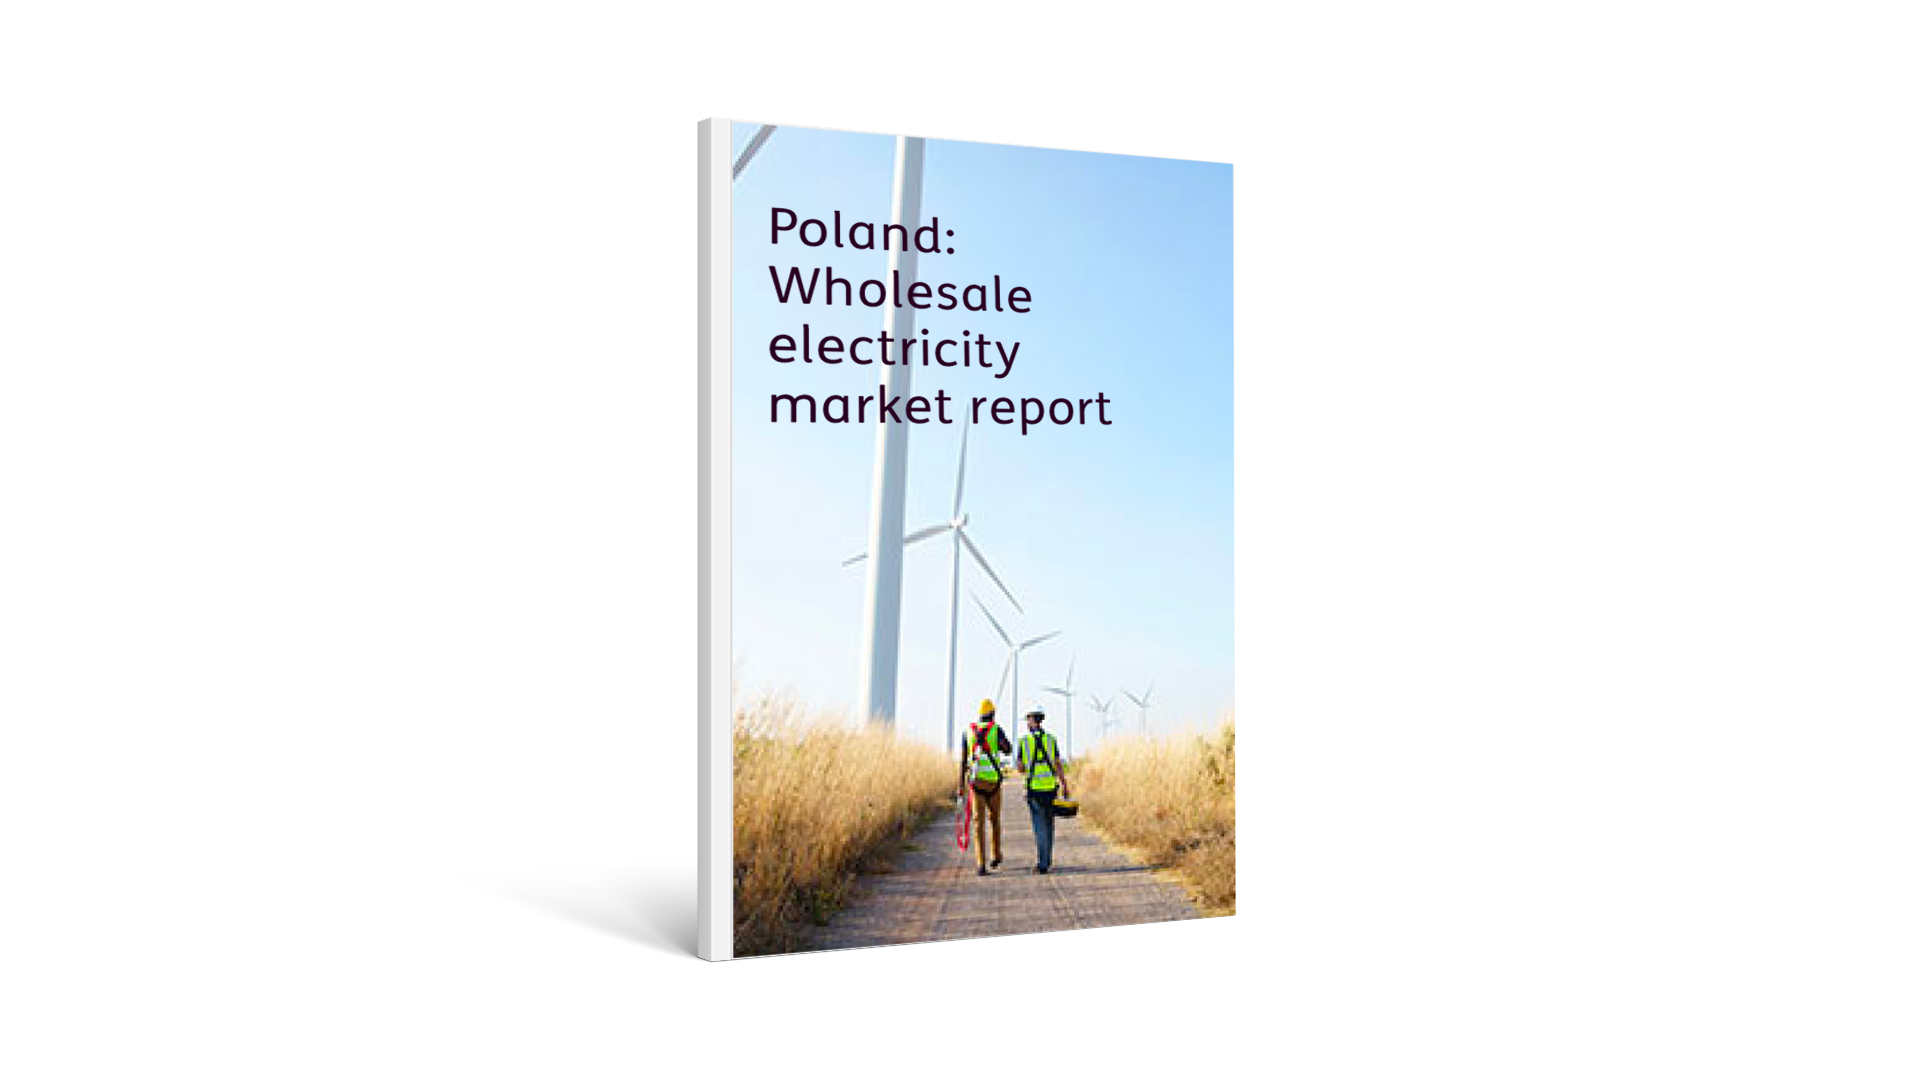 Poland: Wholesale electricity market report